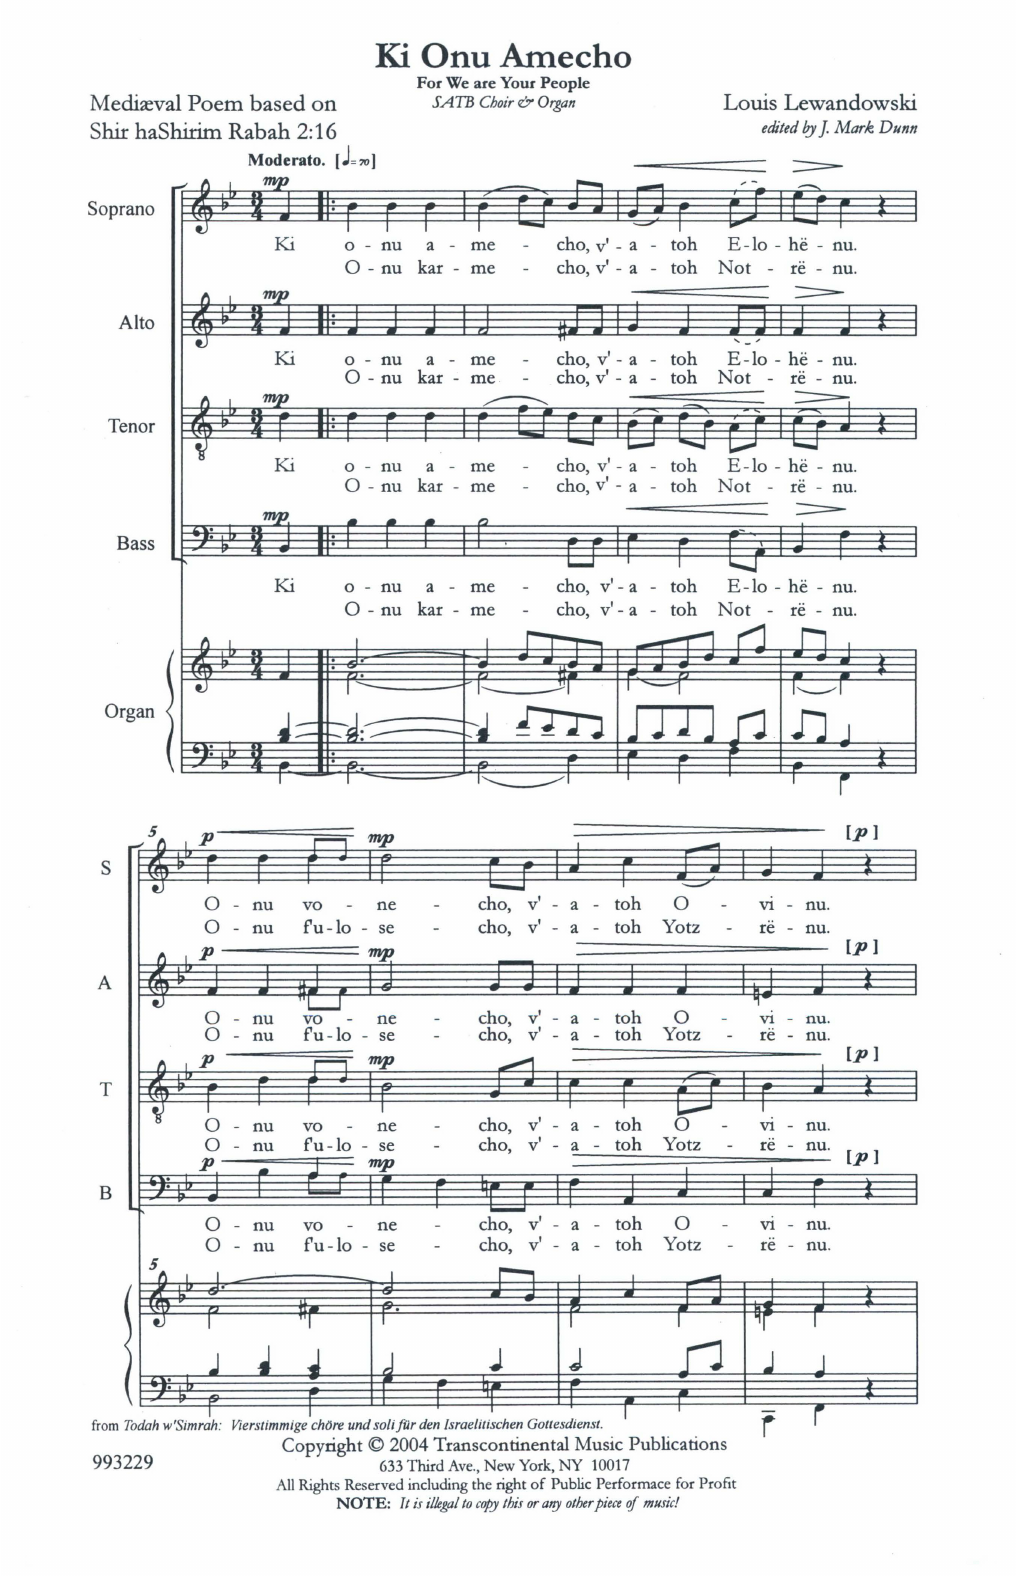 Louis Lewandowski Two Settings of Ki Onu Omecho sheet music notes and chords arranged for SATB Choir